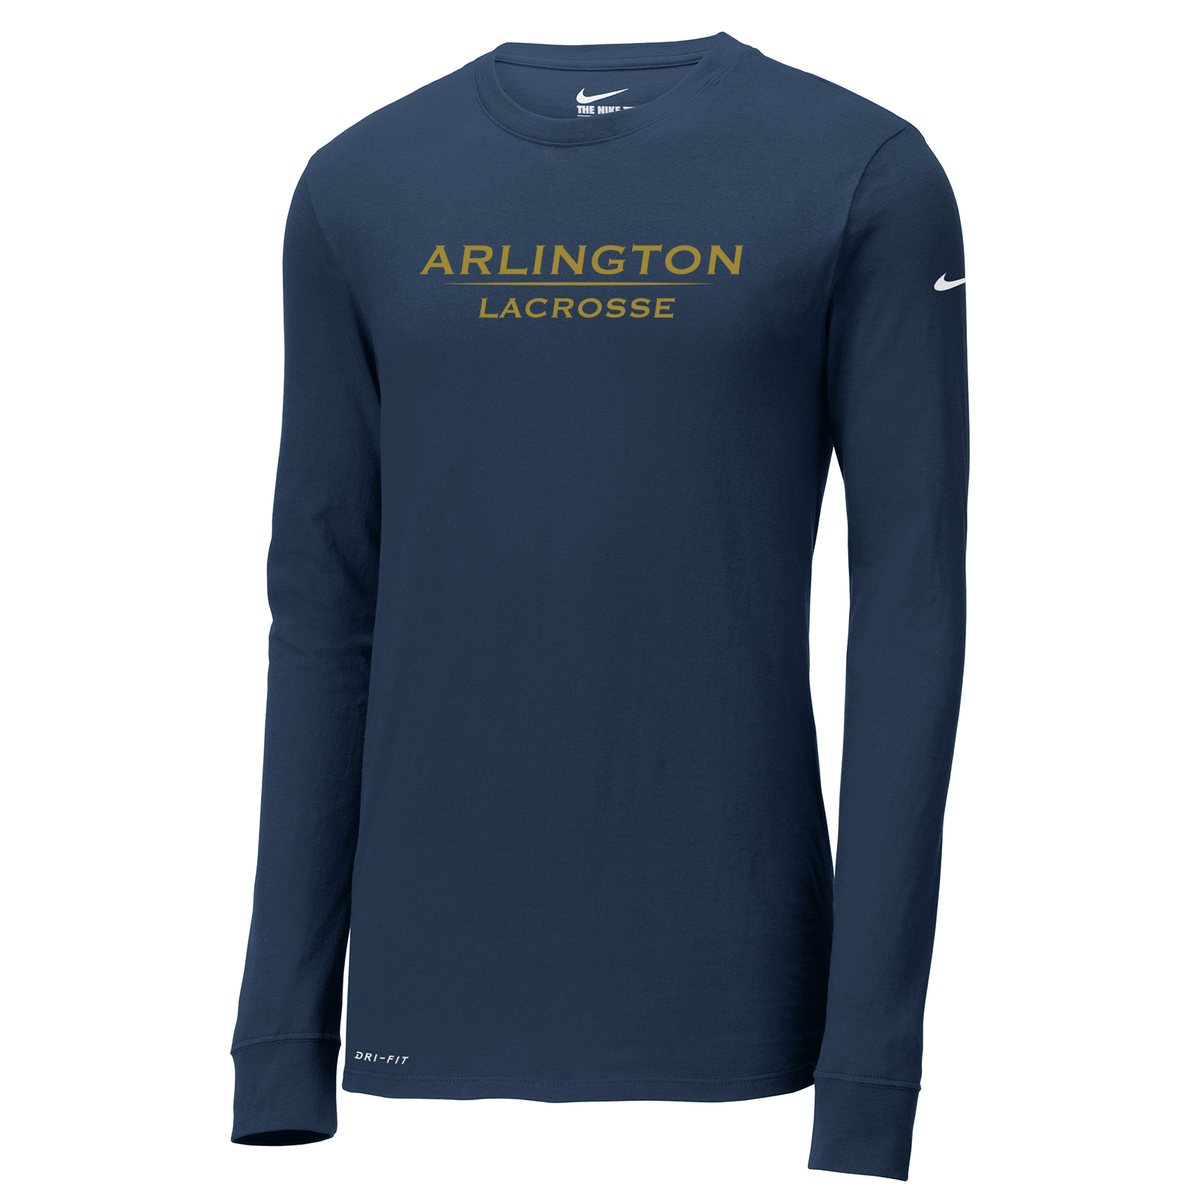 Arlington Lacrosse Nike Dri-FIT Long Sleeve Tee